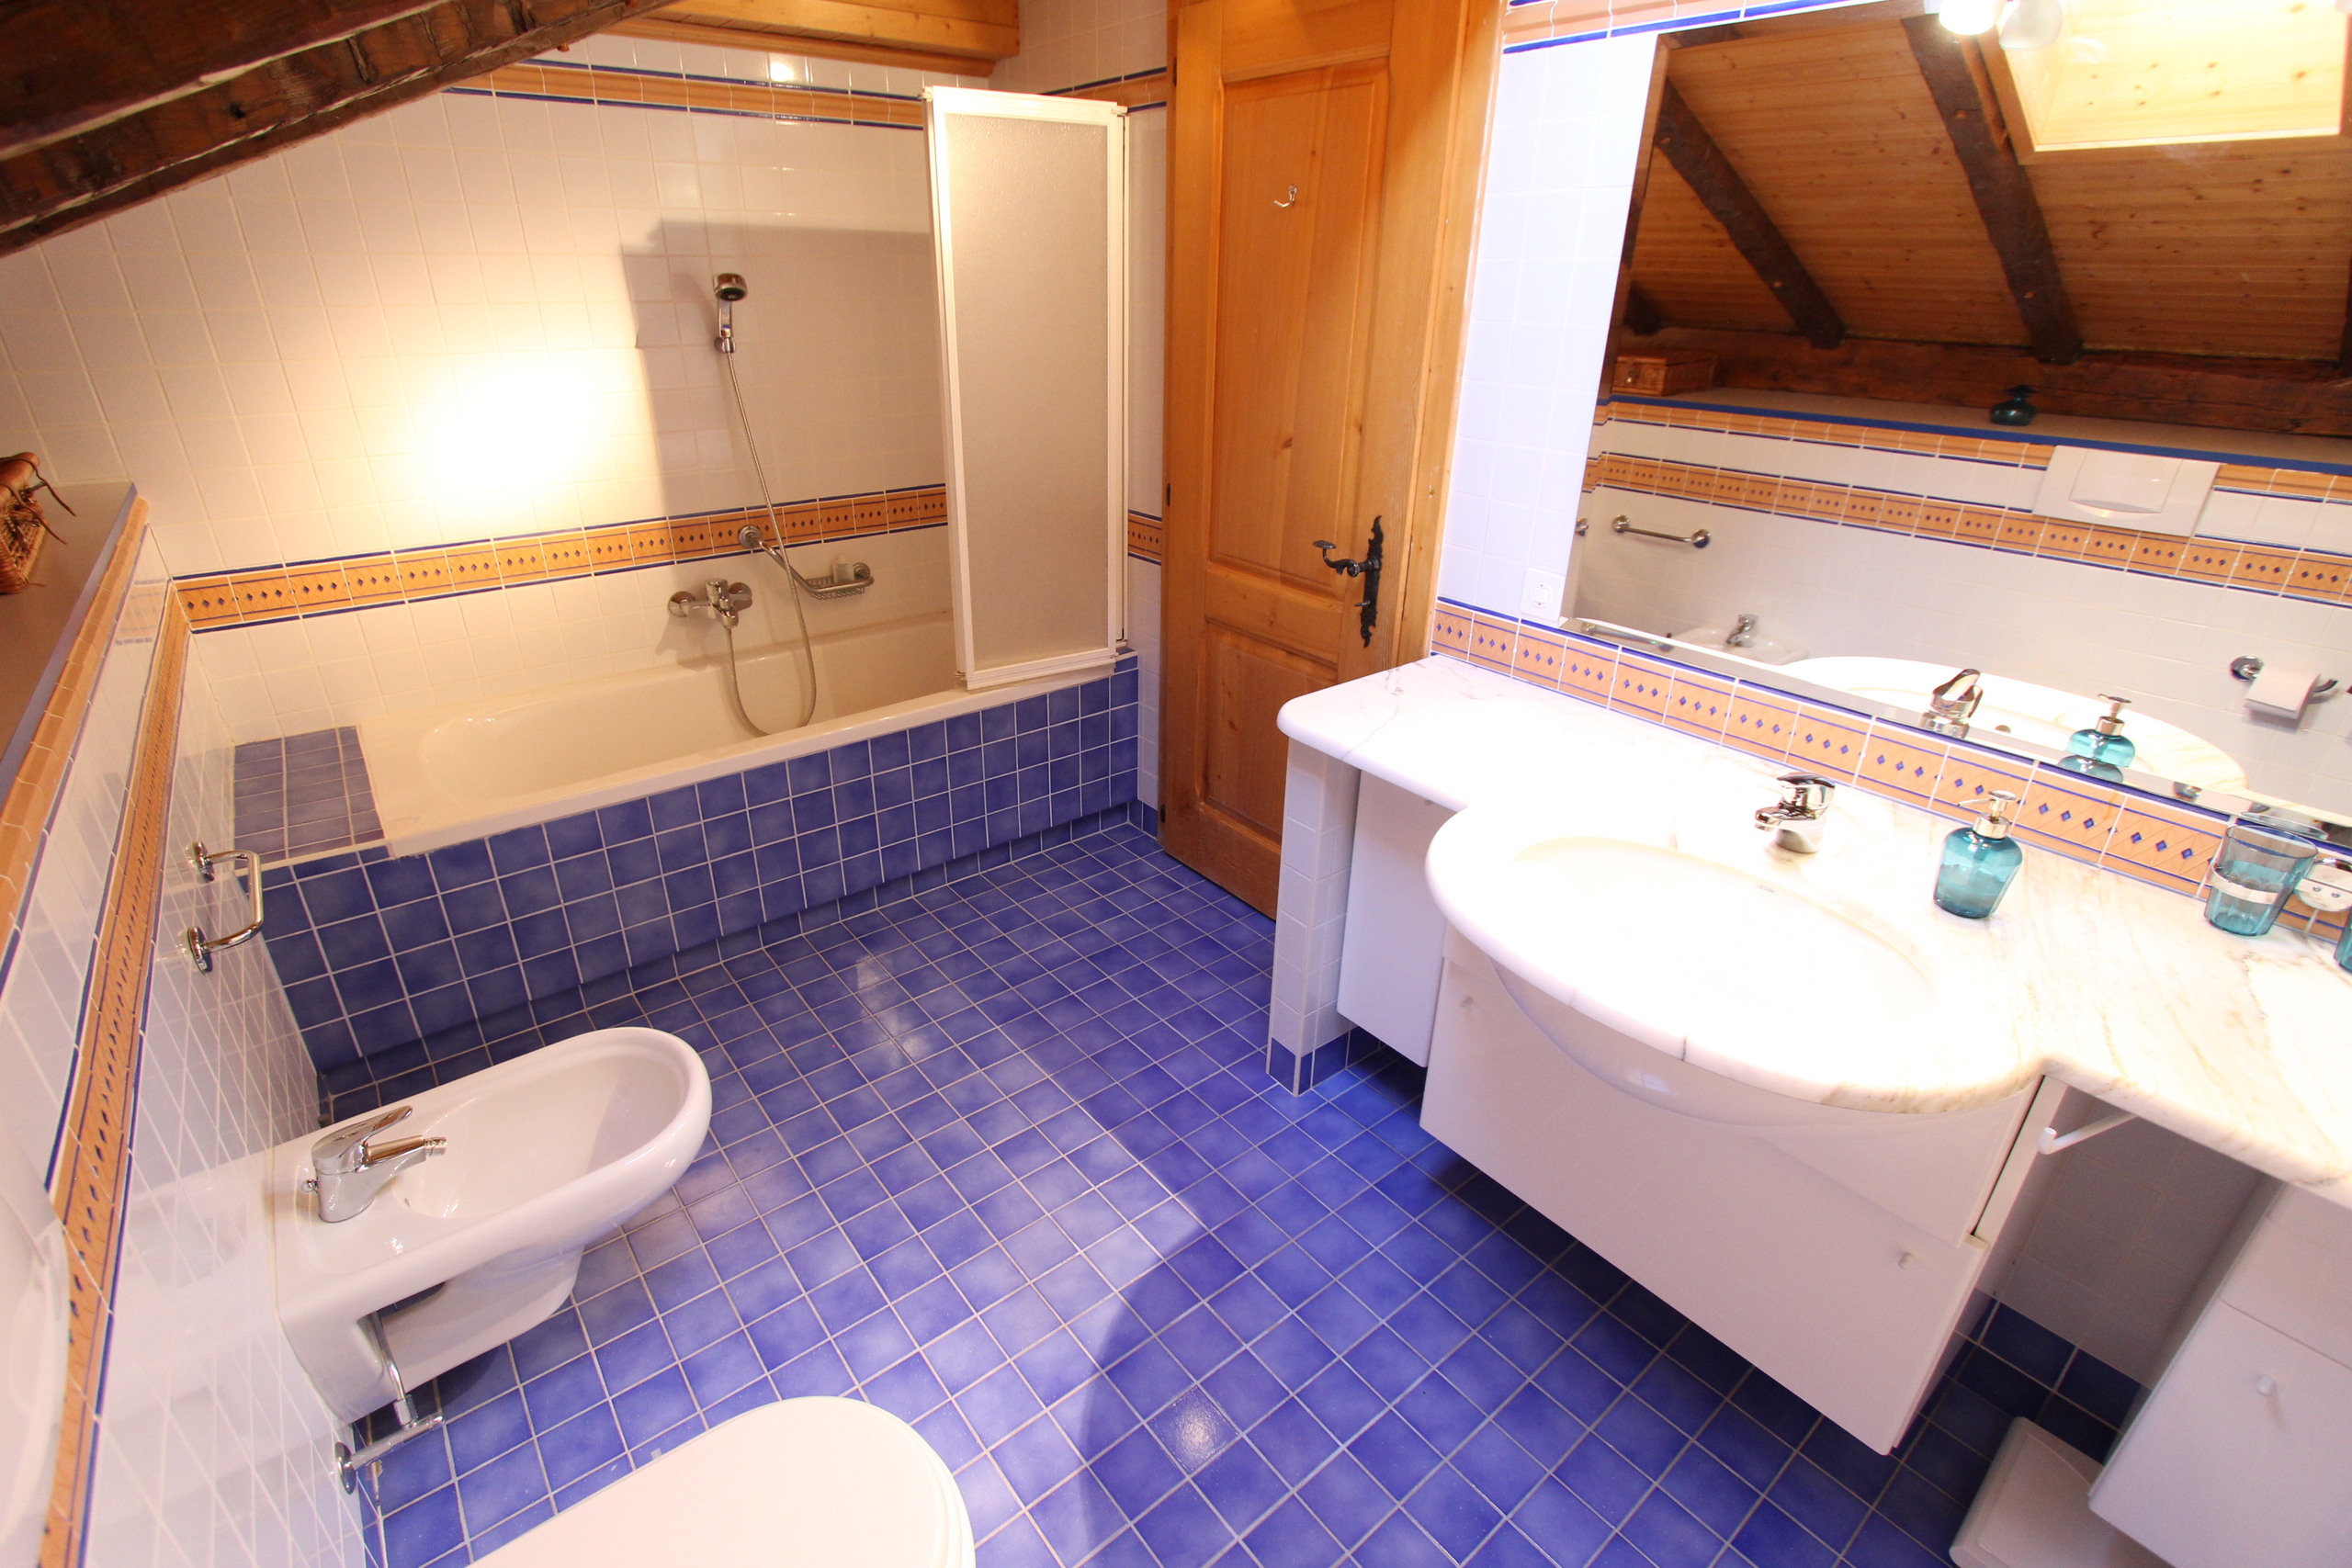 Second Floor / Bathroom with bath, sink, bidet and toilet